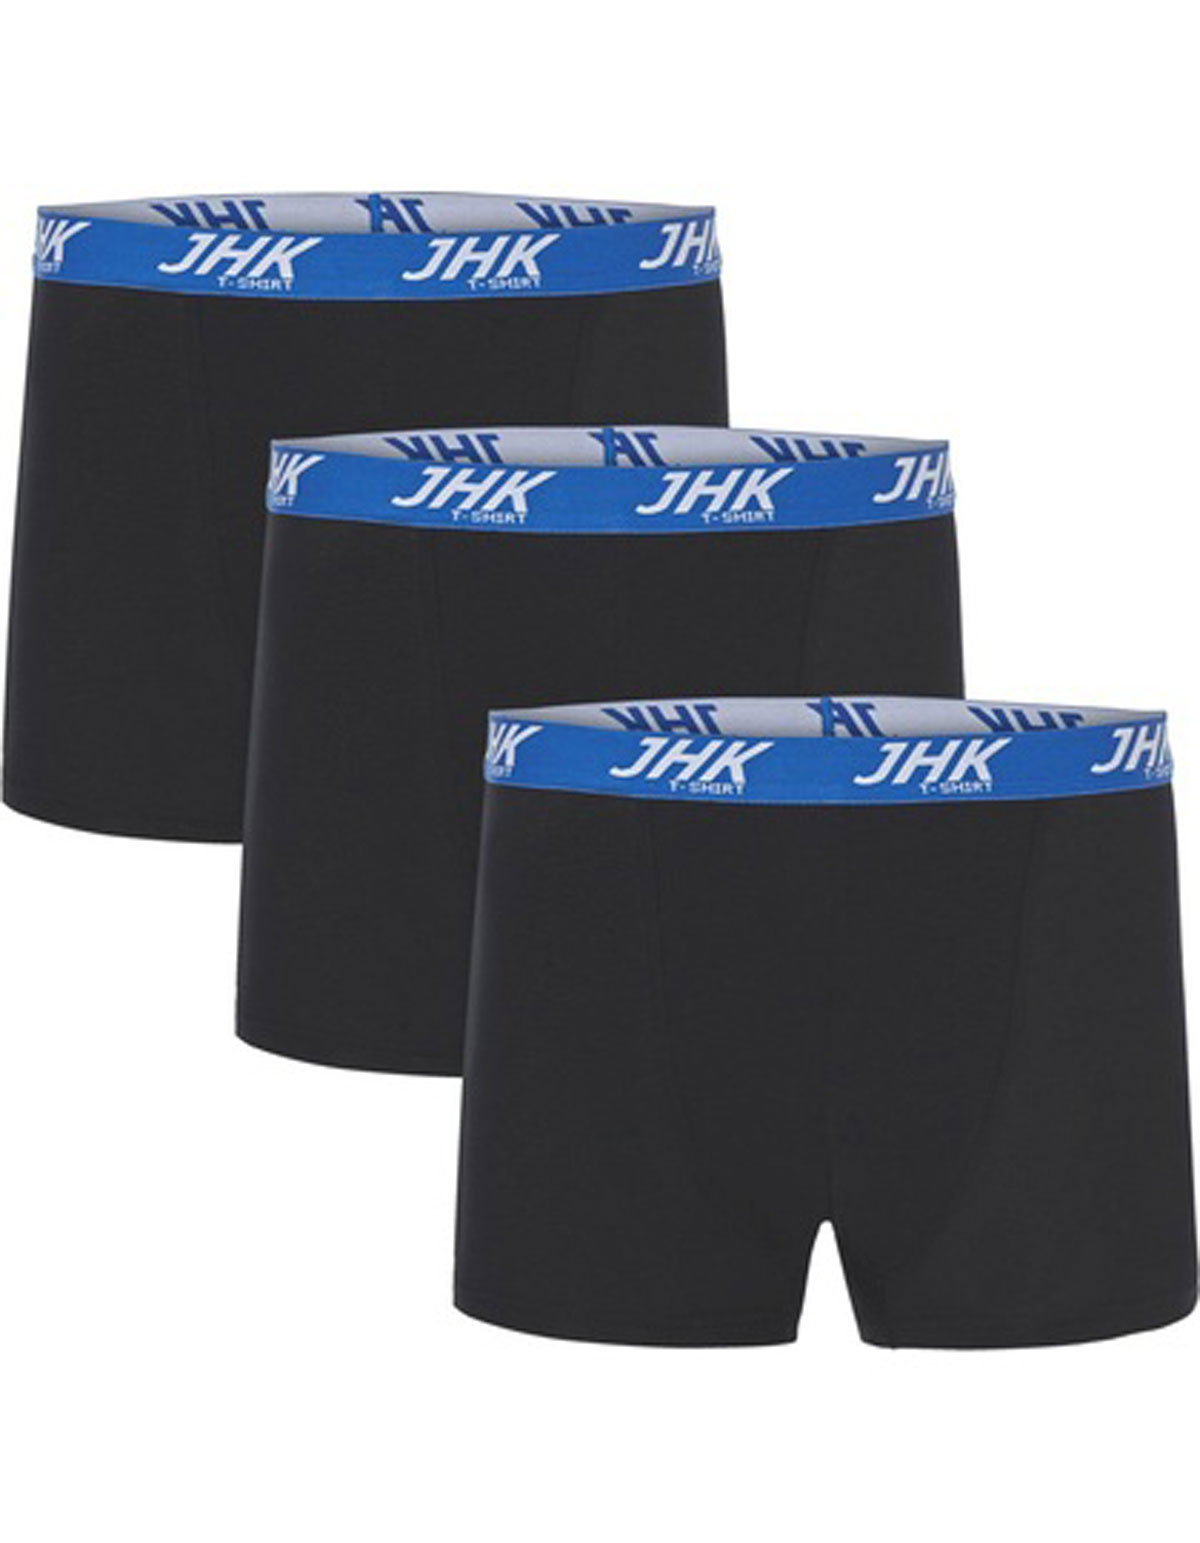 Men´s Short Boxer Briefs (3 Pack) JHK900